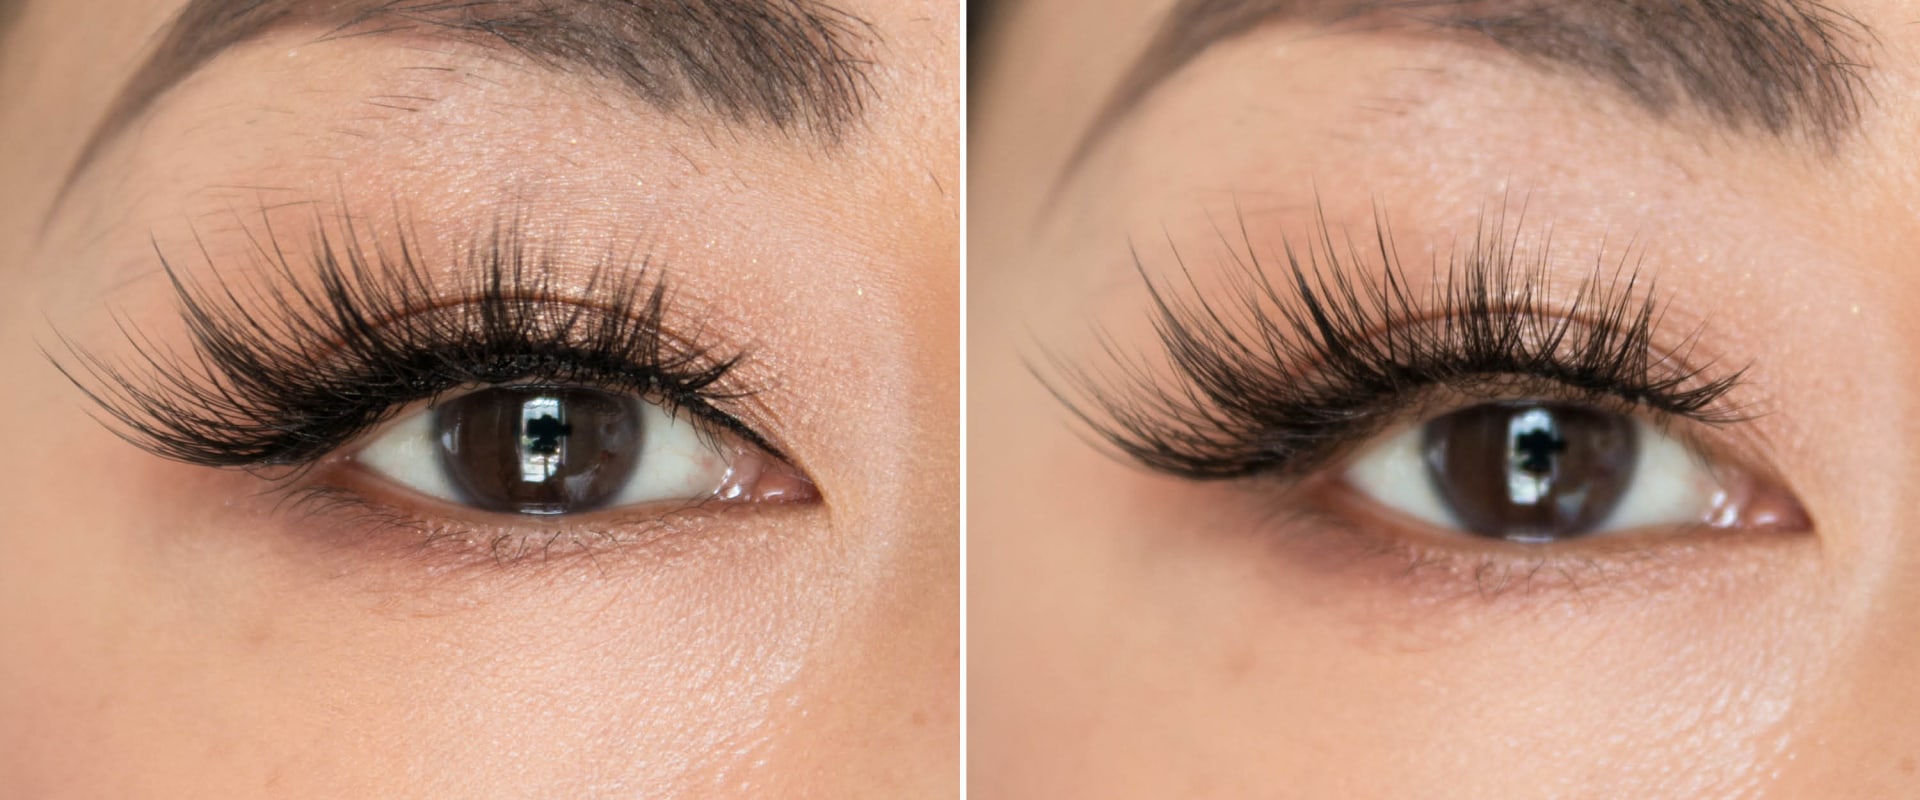 Where do eyelashes go after you blink?